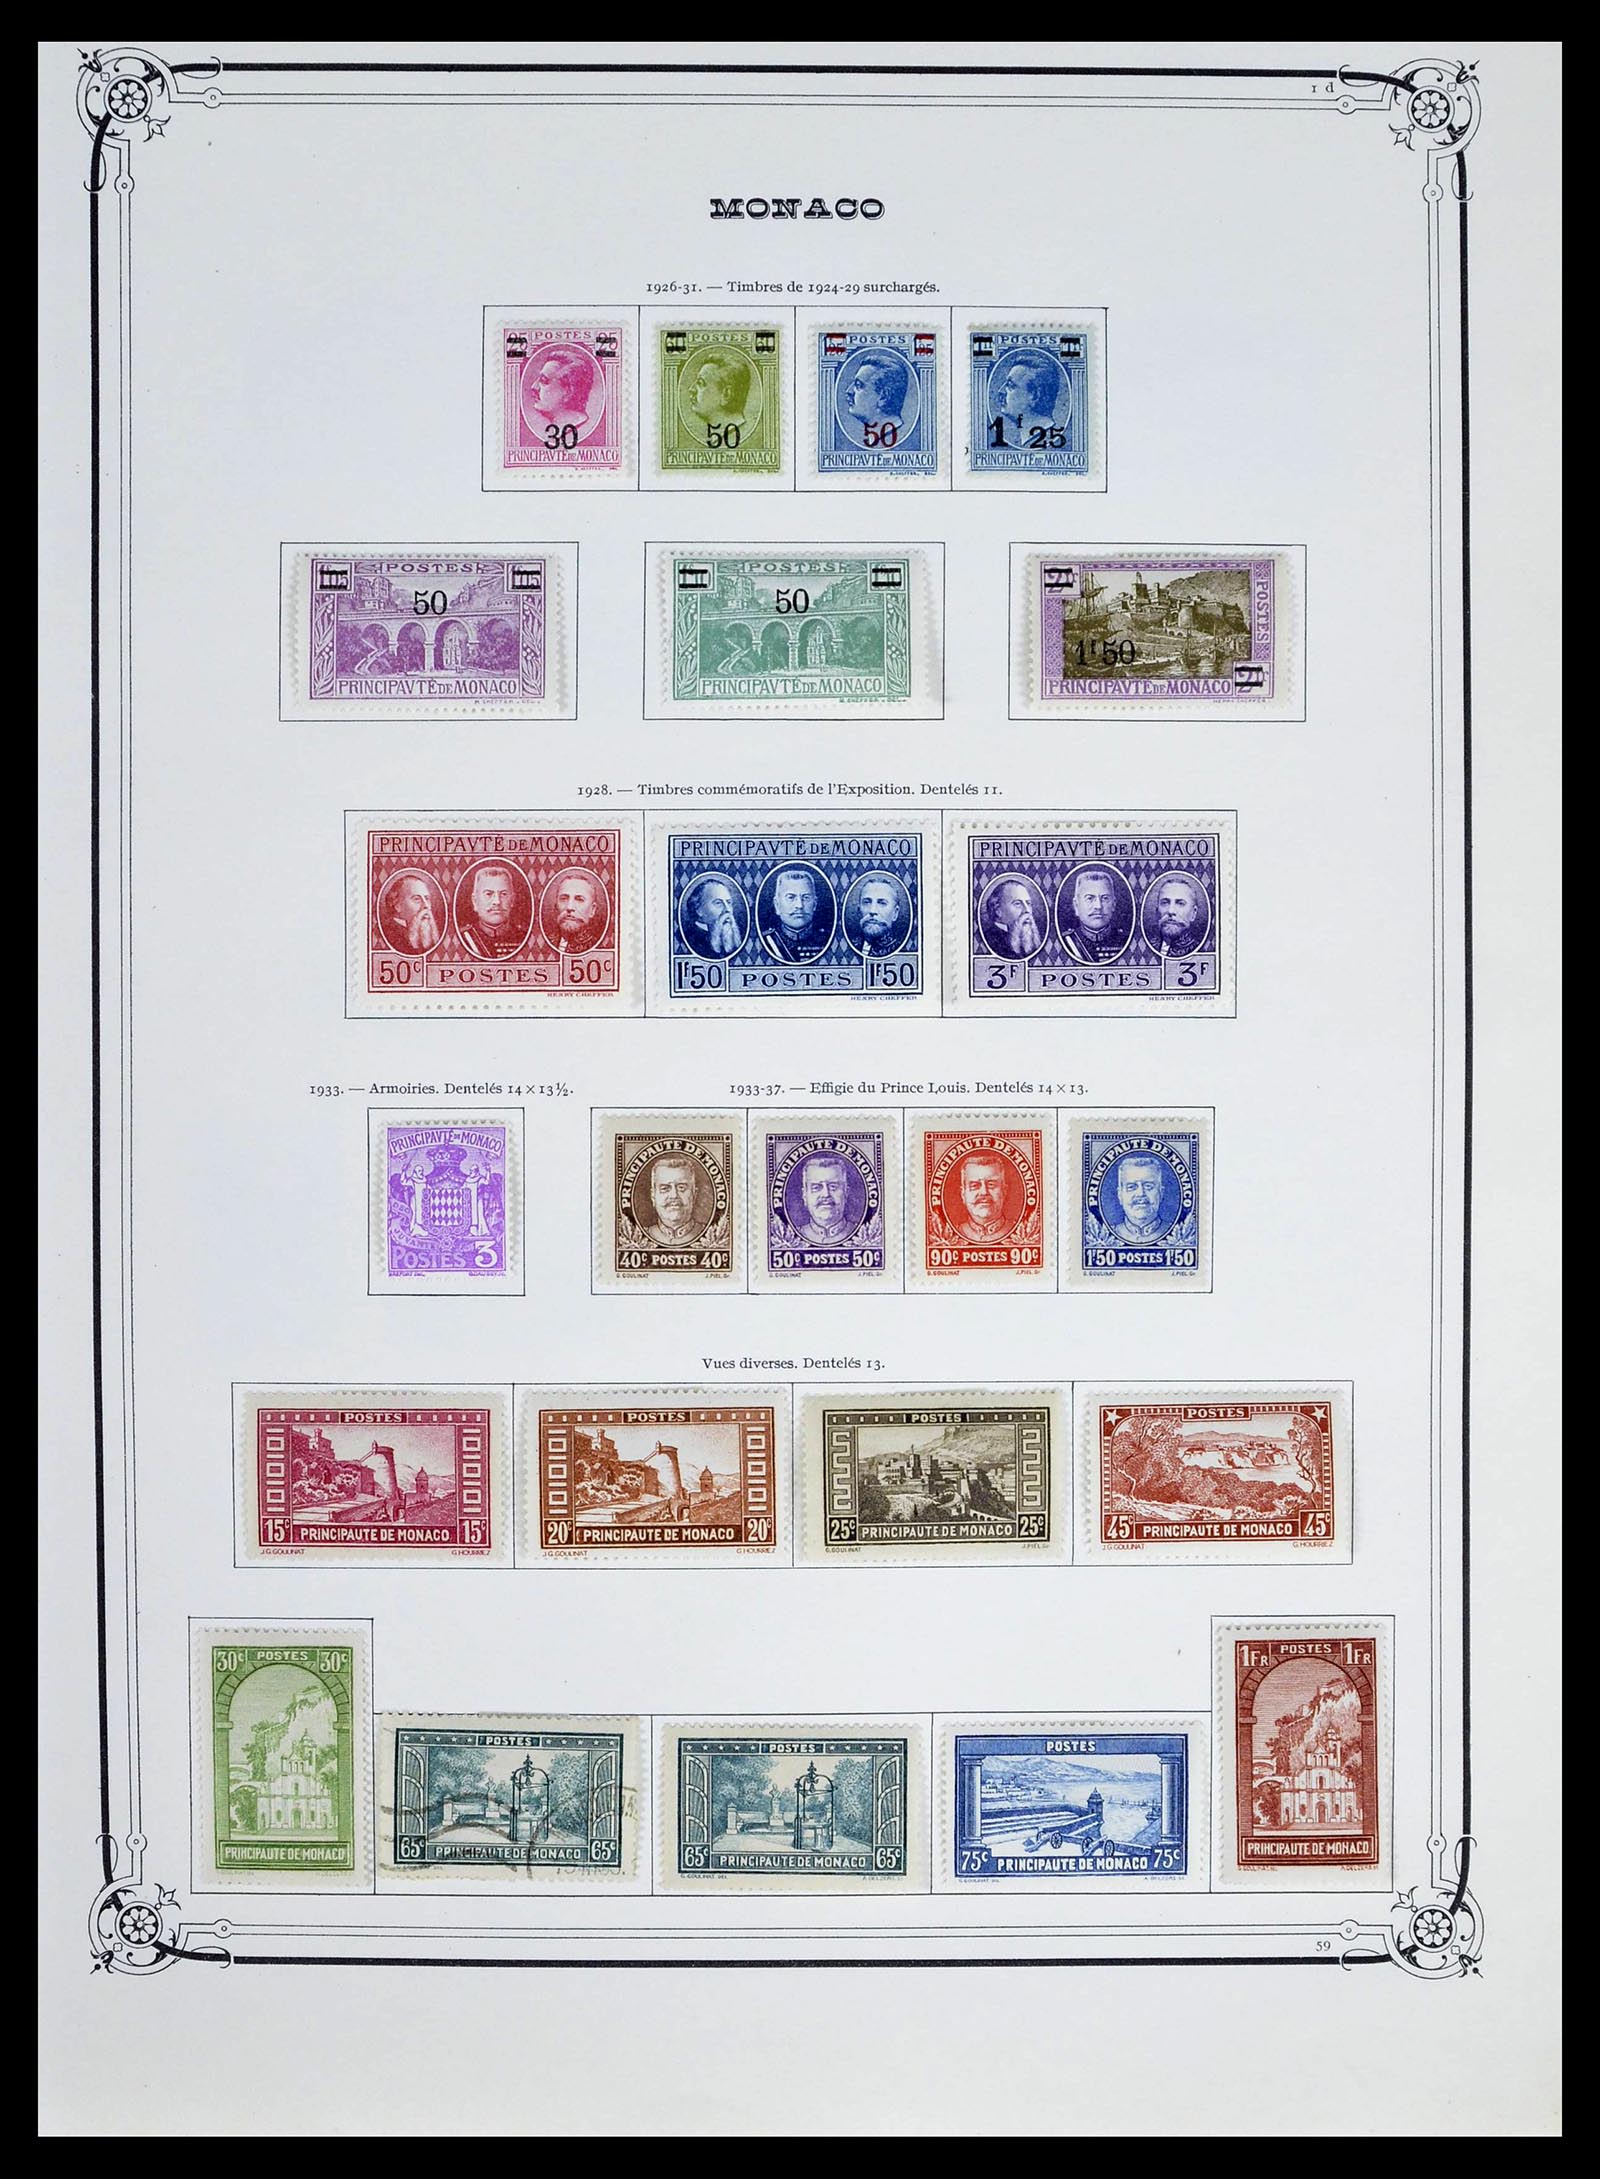 39133 0008 - Stamp collection 39133 Monaco 1885-1996.